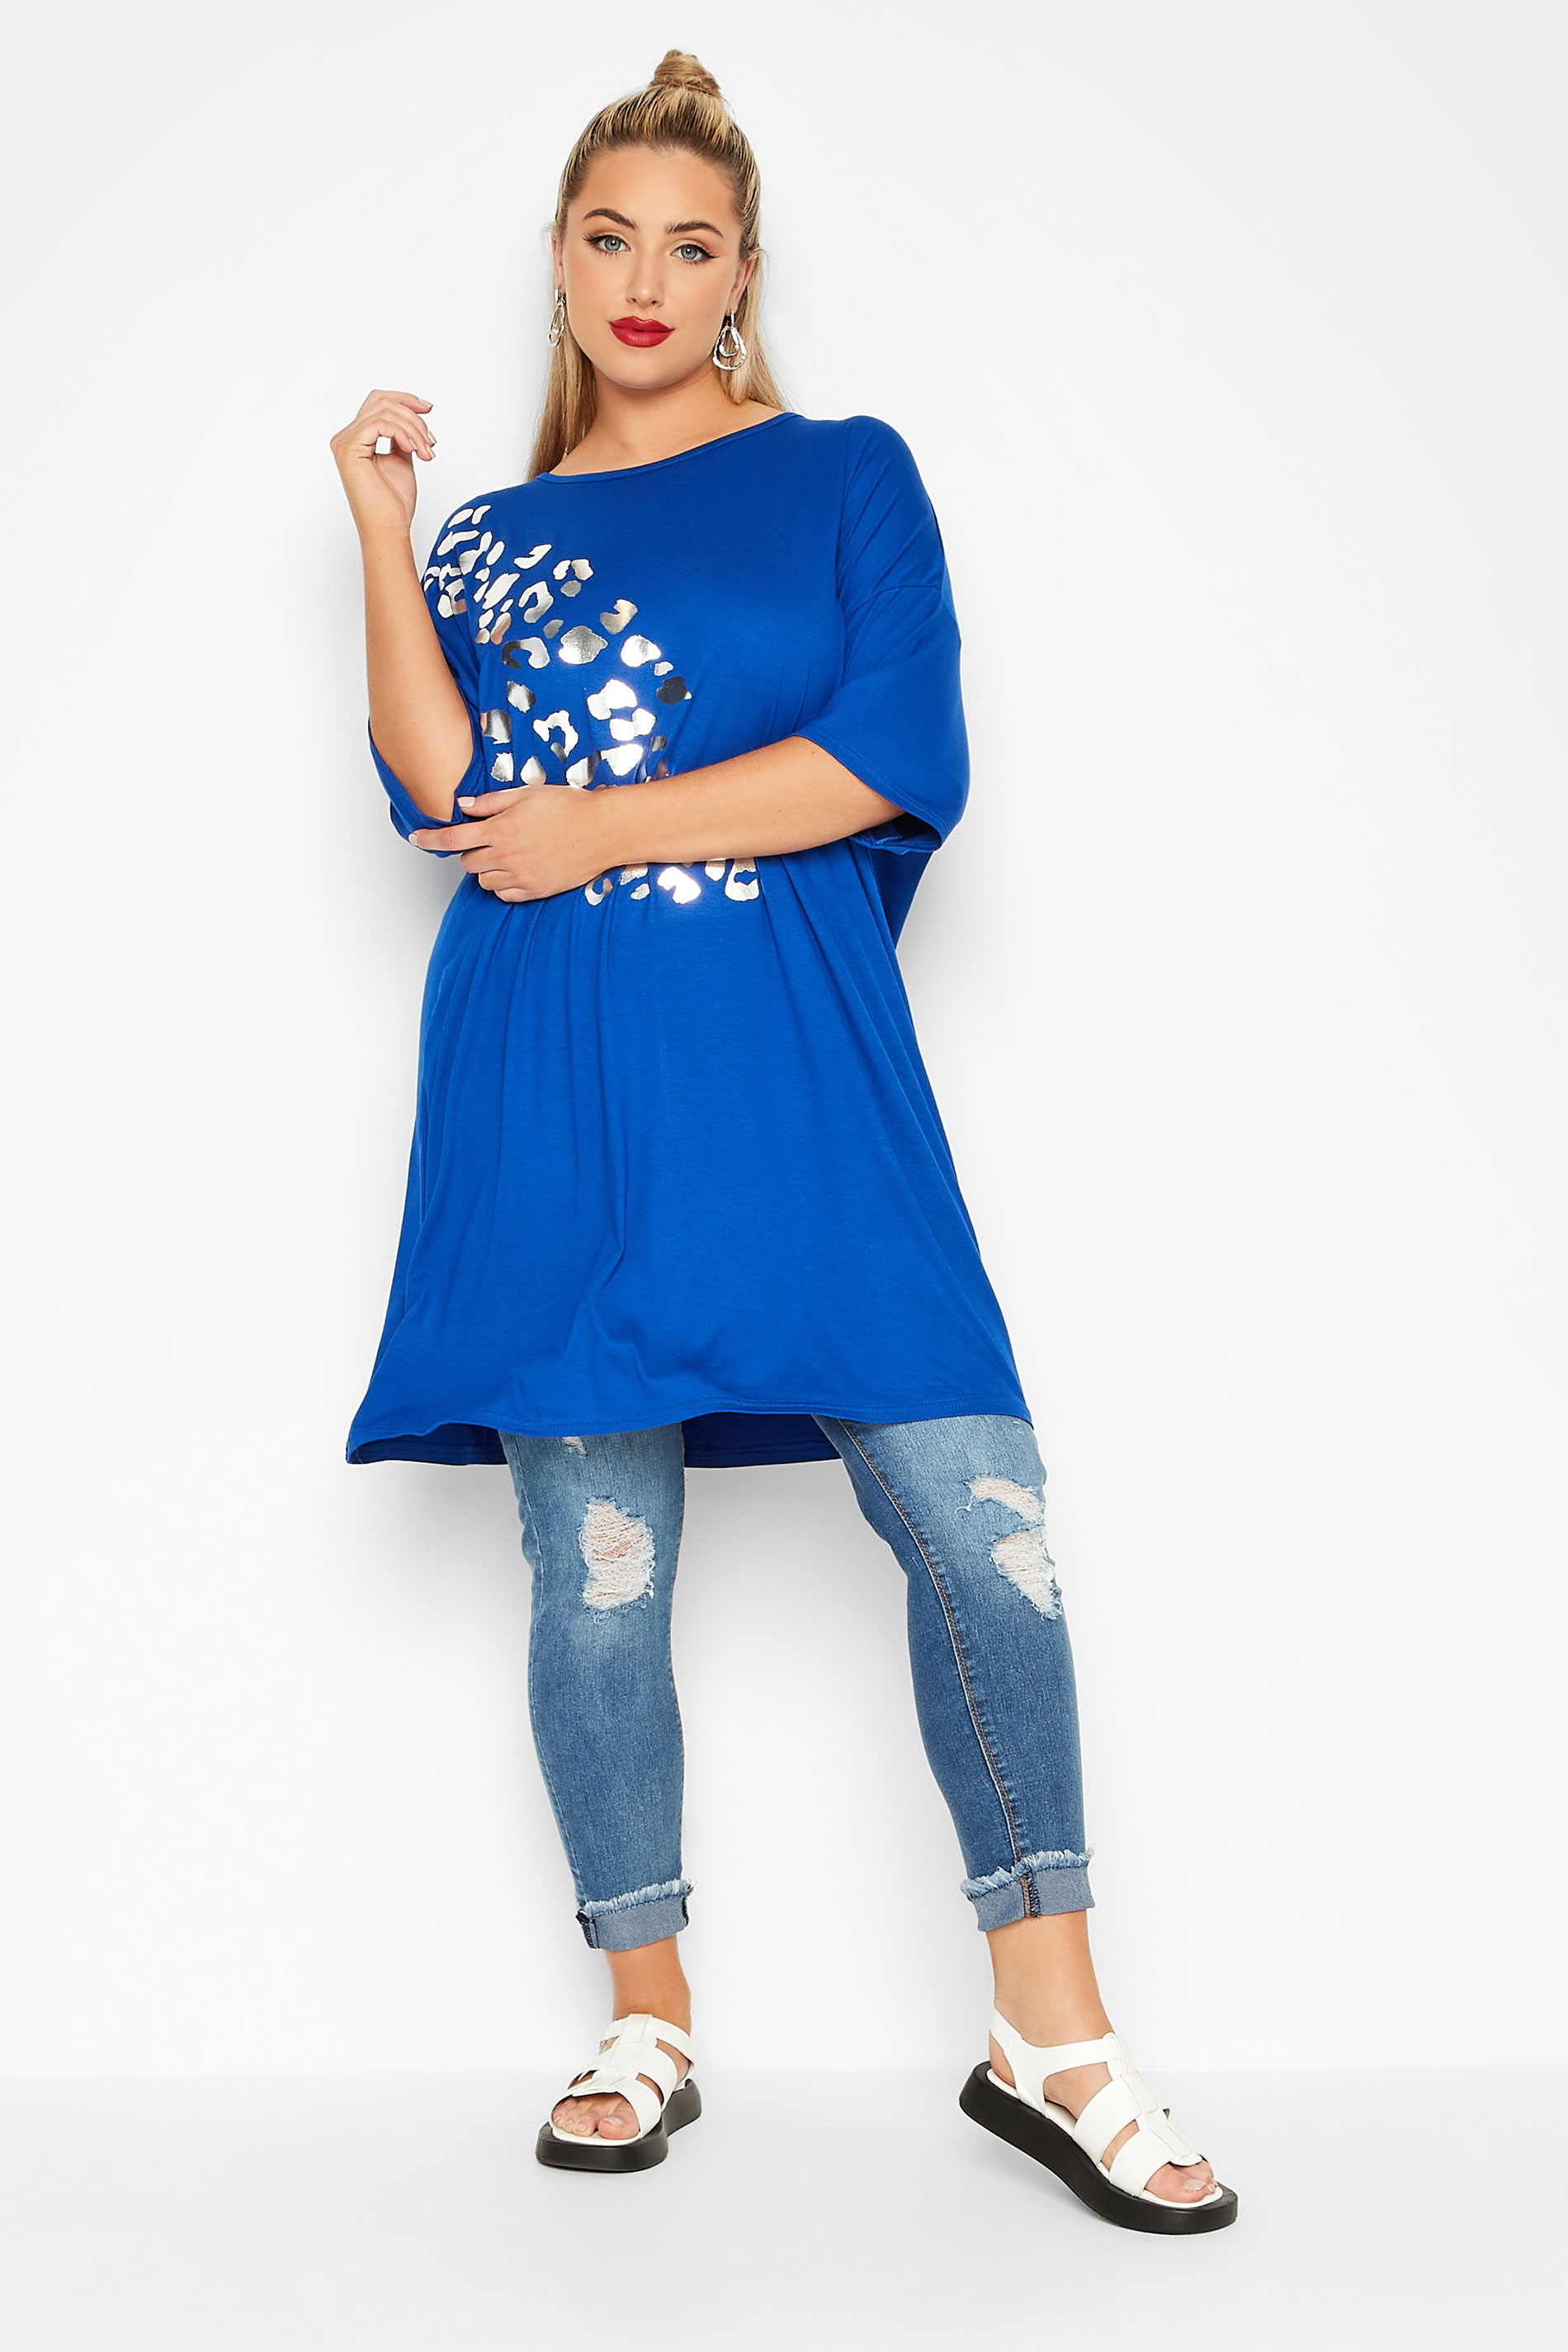 Grande taille  Tops Grande taille  T-Shirts | LIMITED COLLECTION - T-Shirt Bleu Roi Léopard Argenté - SV79503